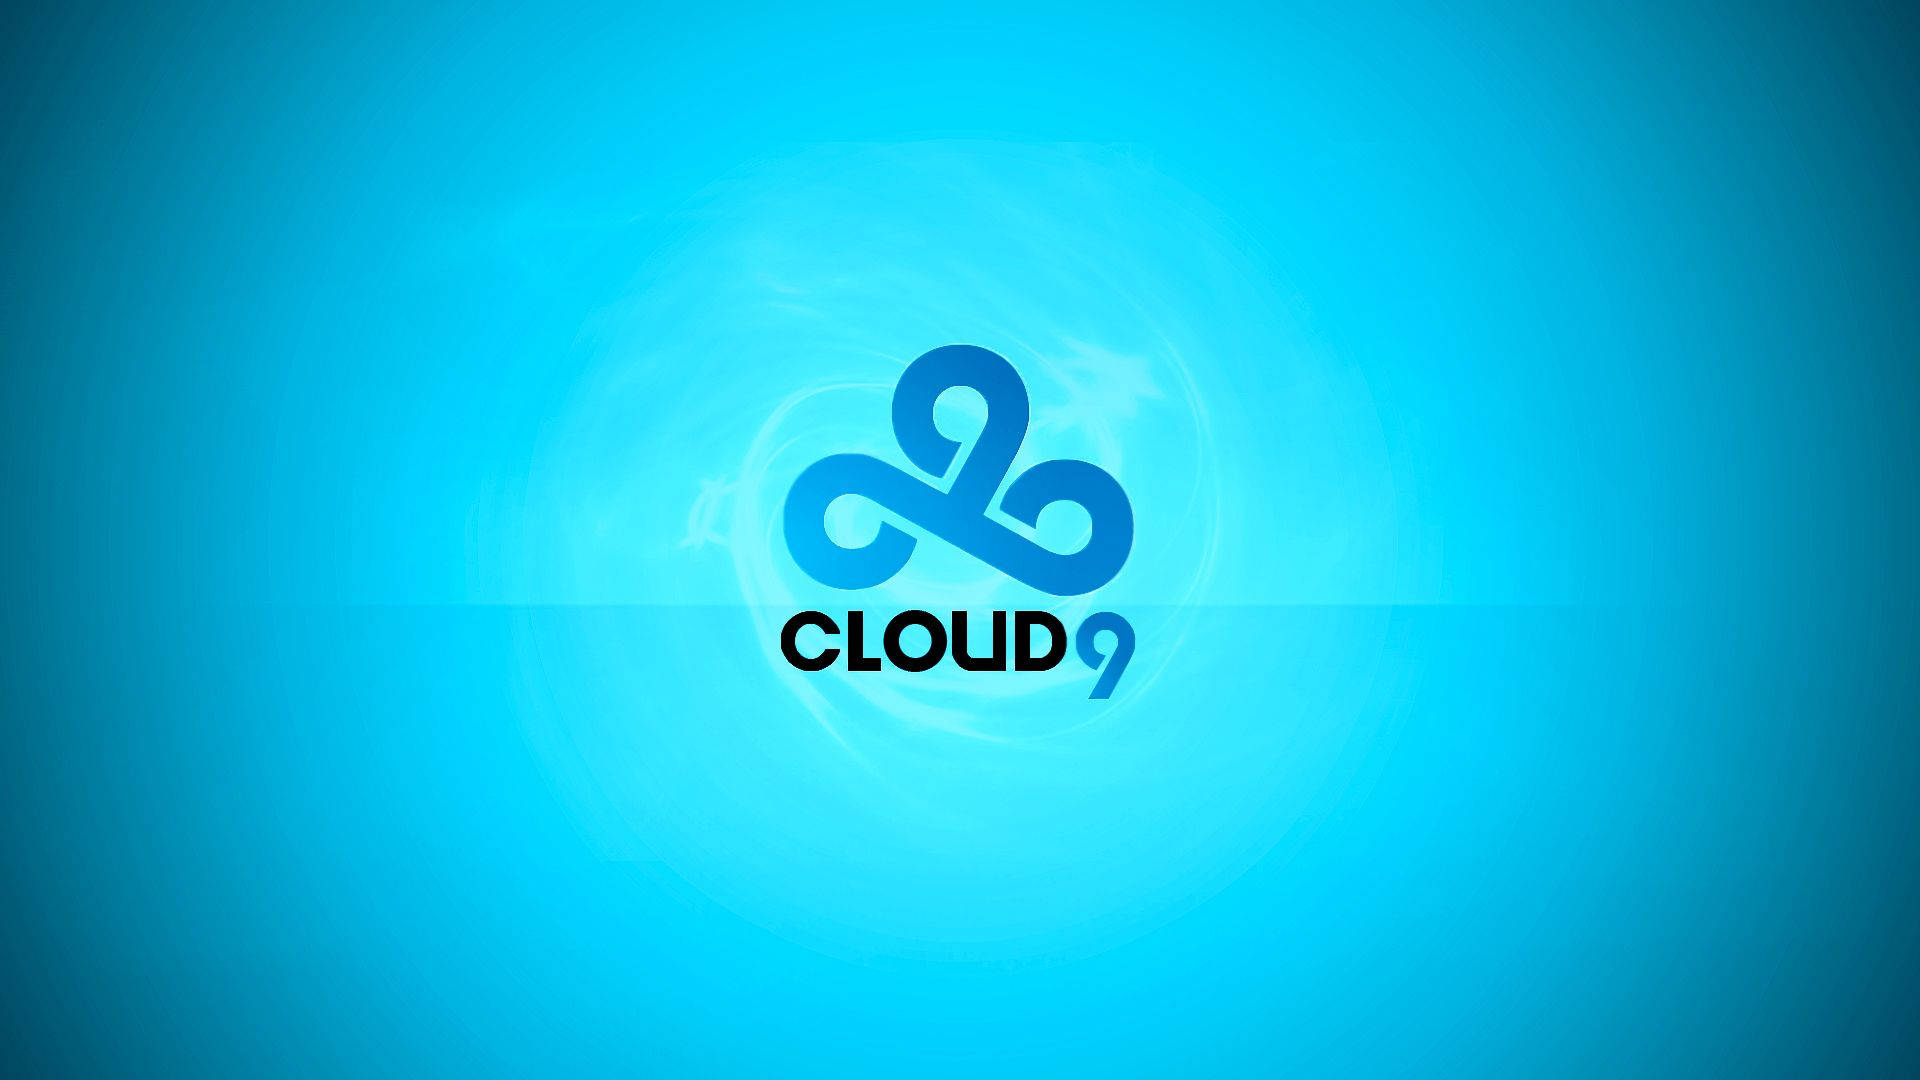 Cloud9 Vibrant Blue Colored Logo Background